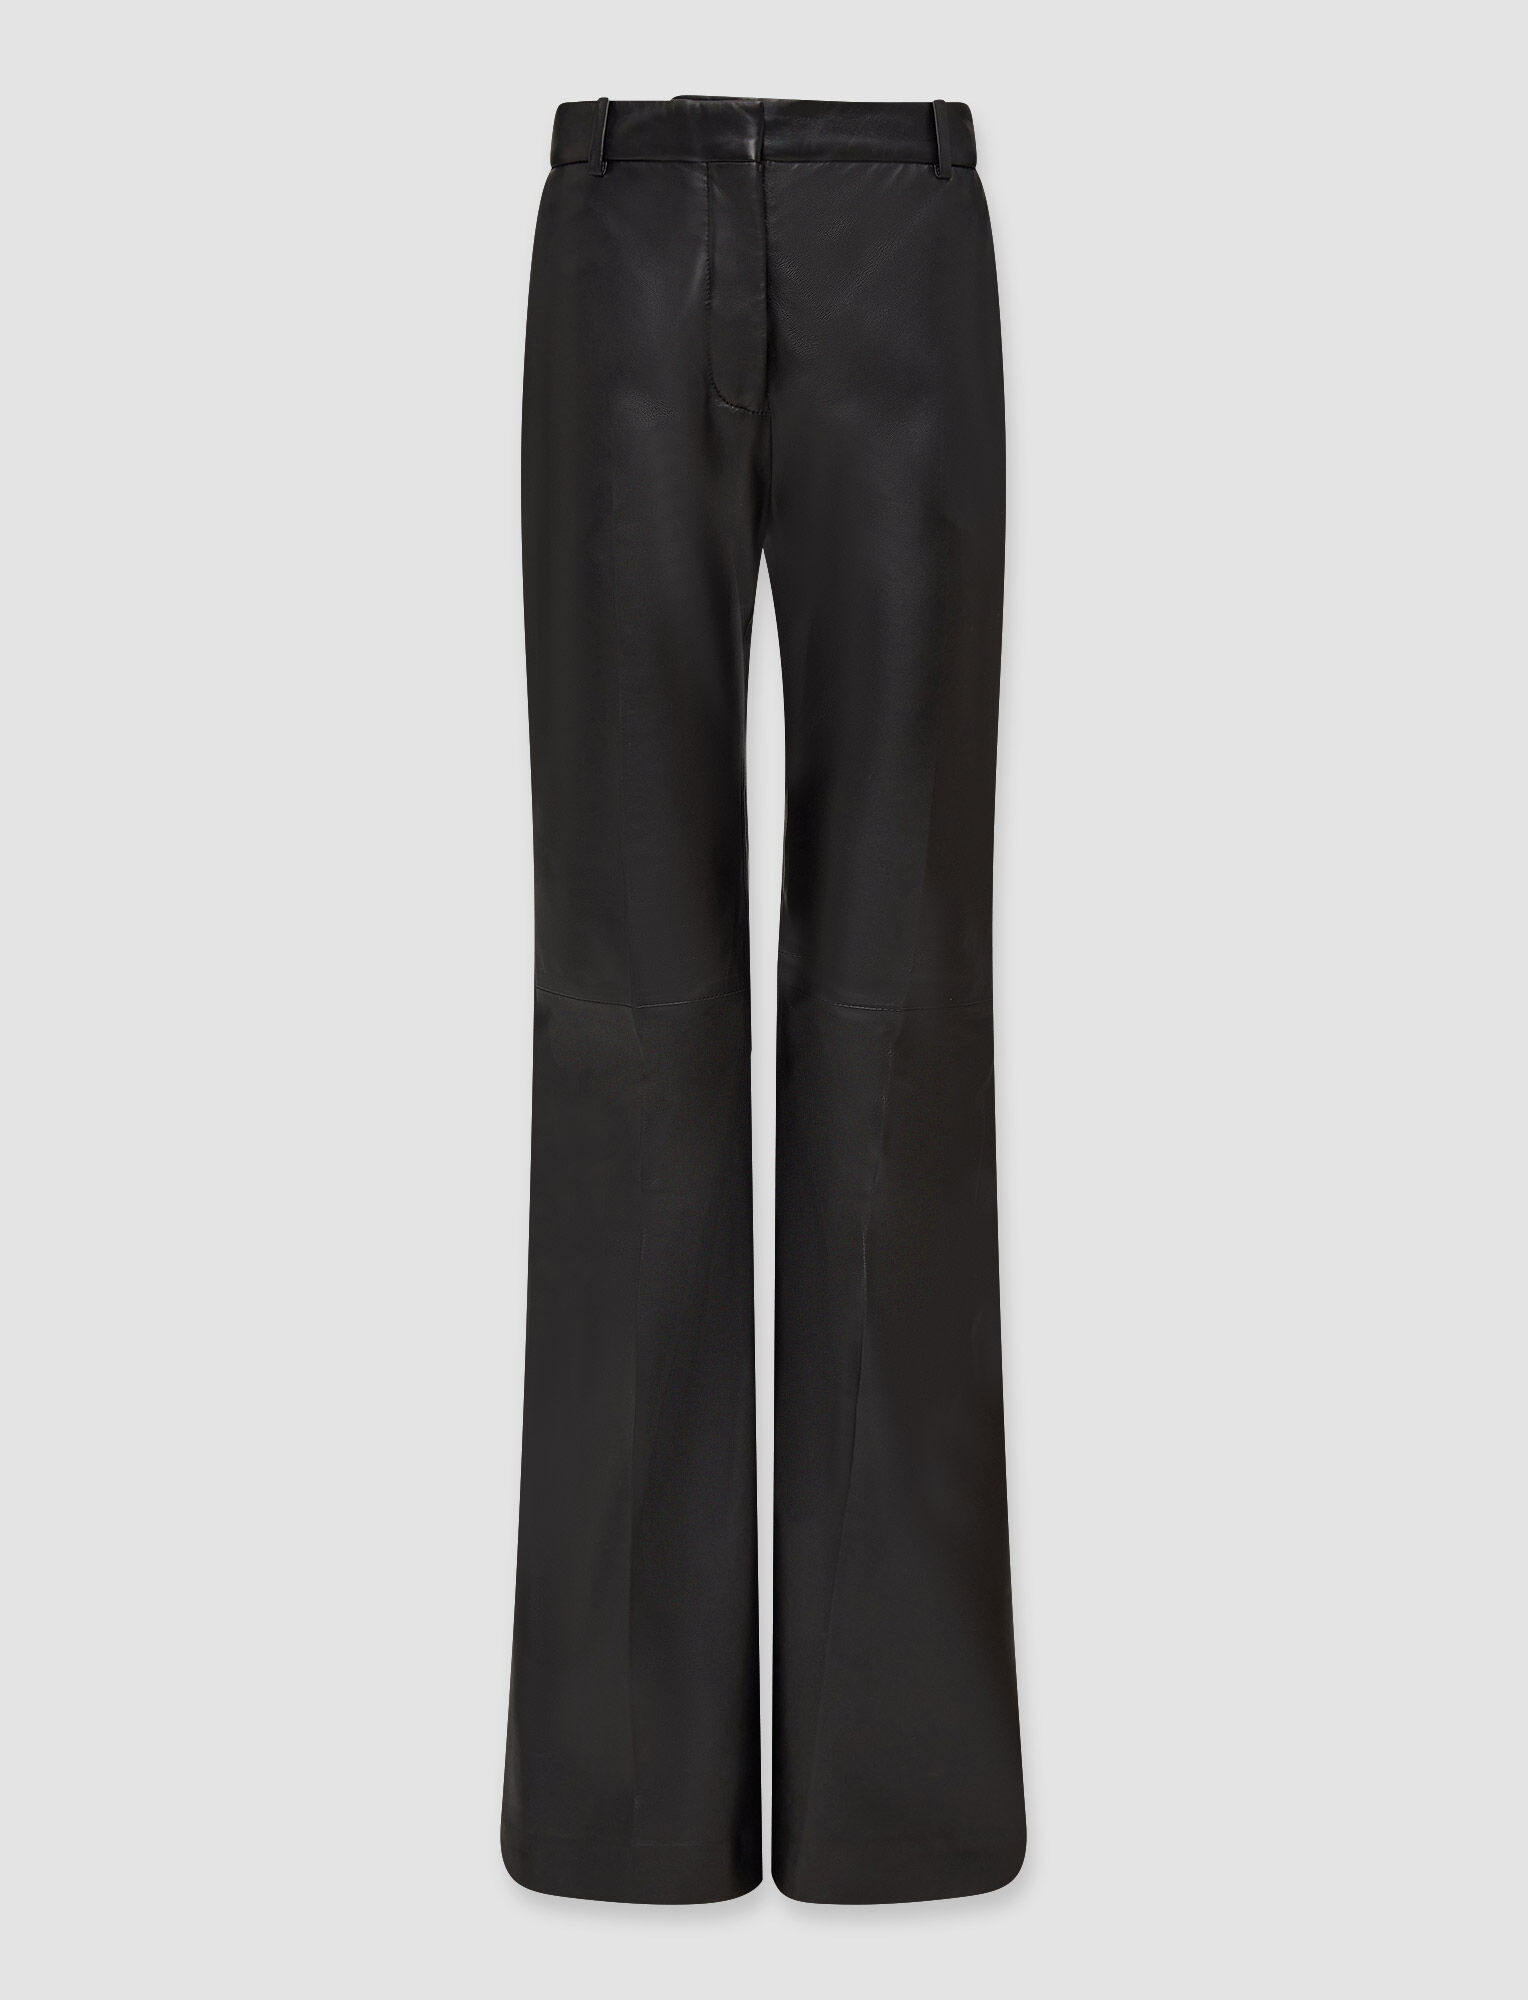 Joseph, Nappa Leather Osier Trousers, in Black